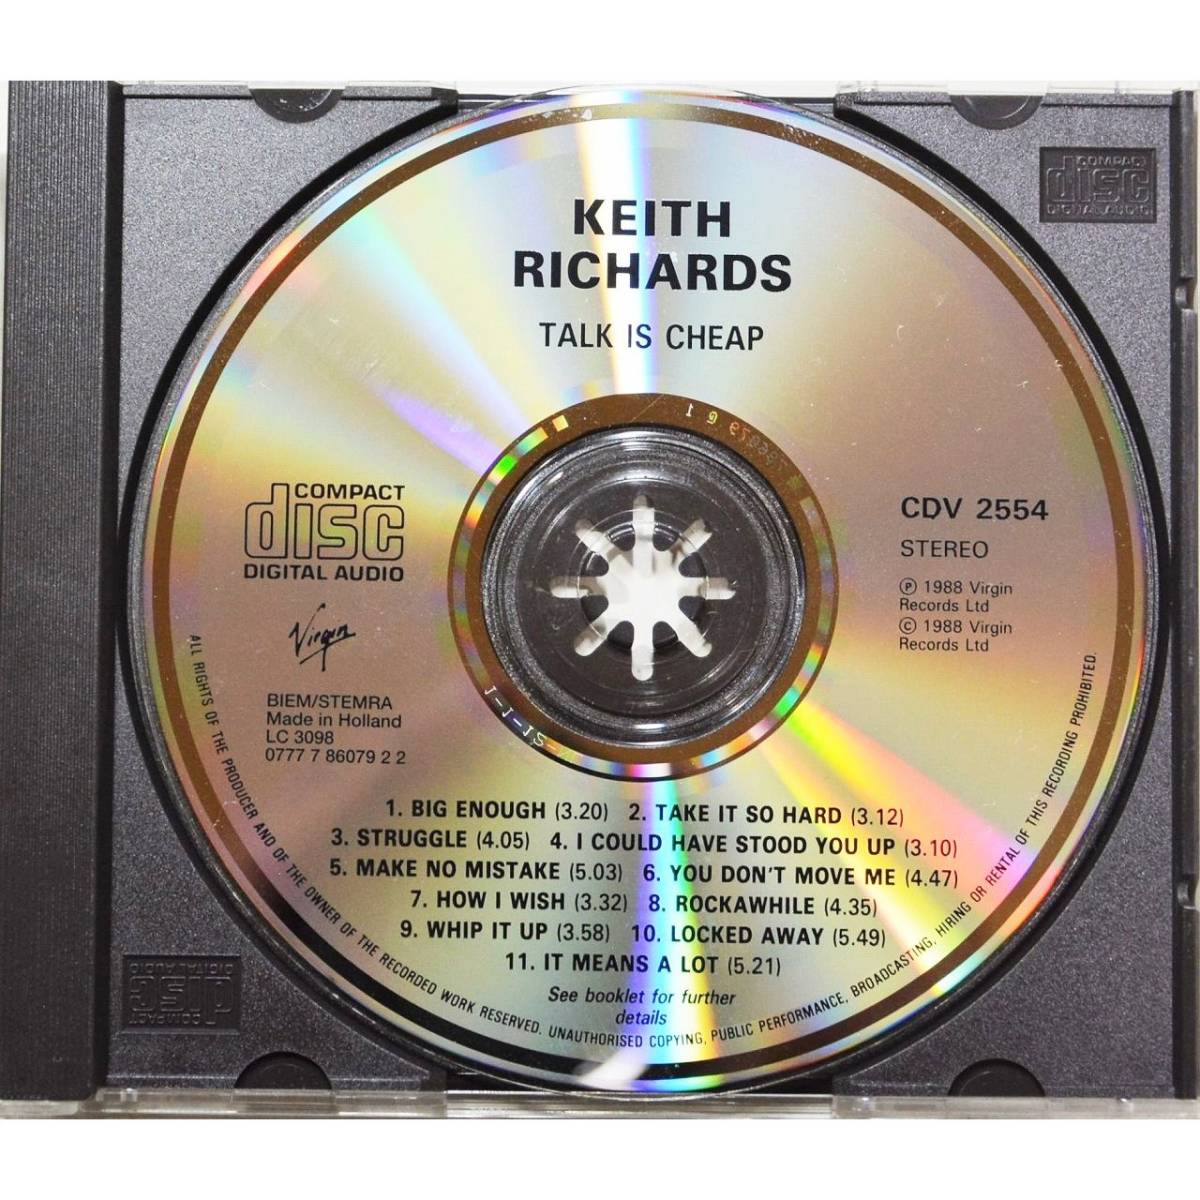 Keith Richards / Talk Is Cheap ◇ キース・リチャーズ / トーク・イズ・チープ ◇ スティーヴ・ジョーダン / ミック・テイラー ◇_画像3